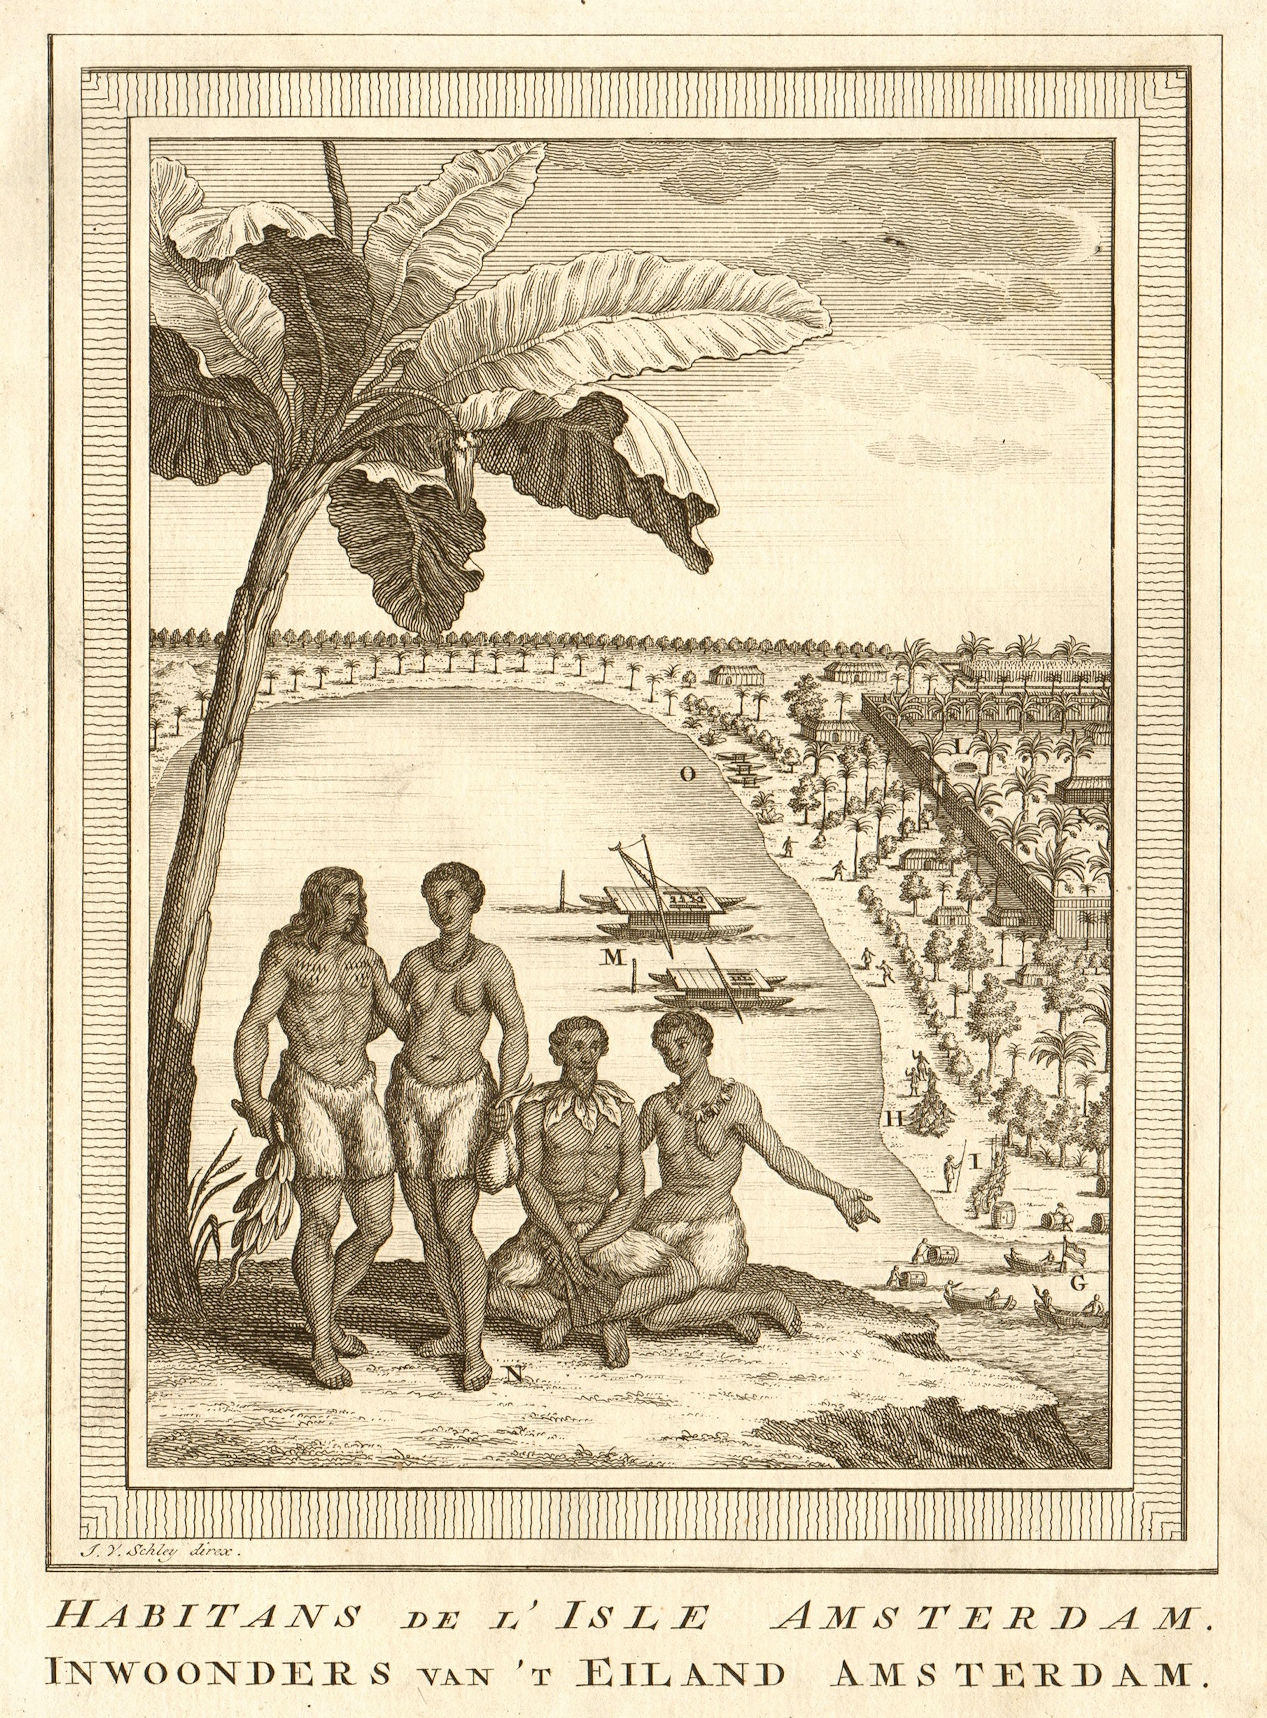 Associate Product 'Habitans de l’lsle Amsterdam'. Tongans, Tongatapu. Tasman 1643. SCHLEY 1758